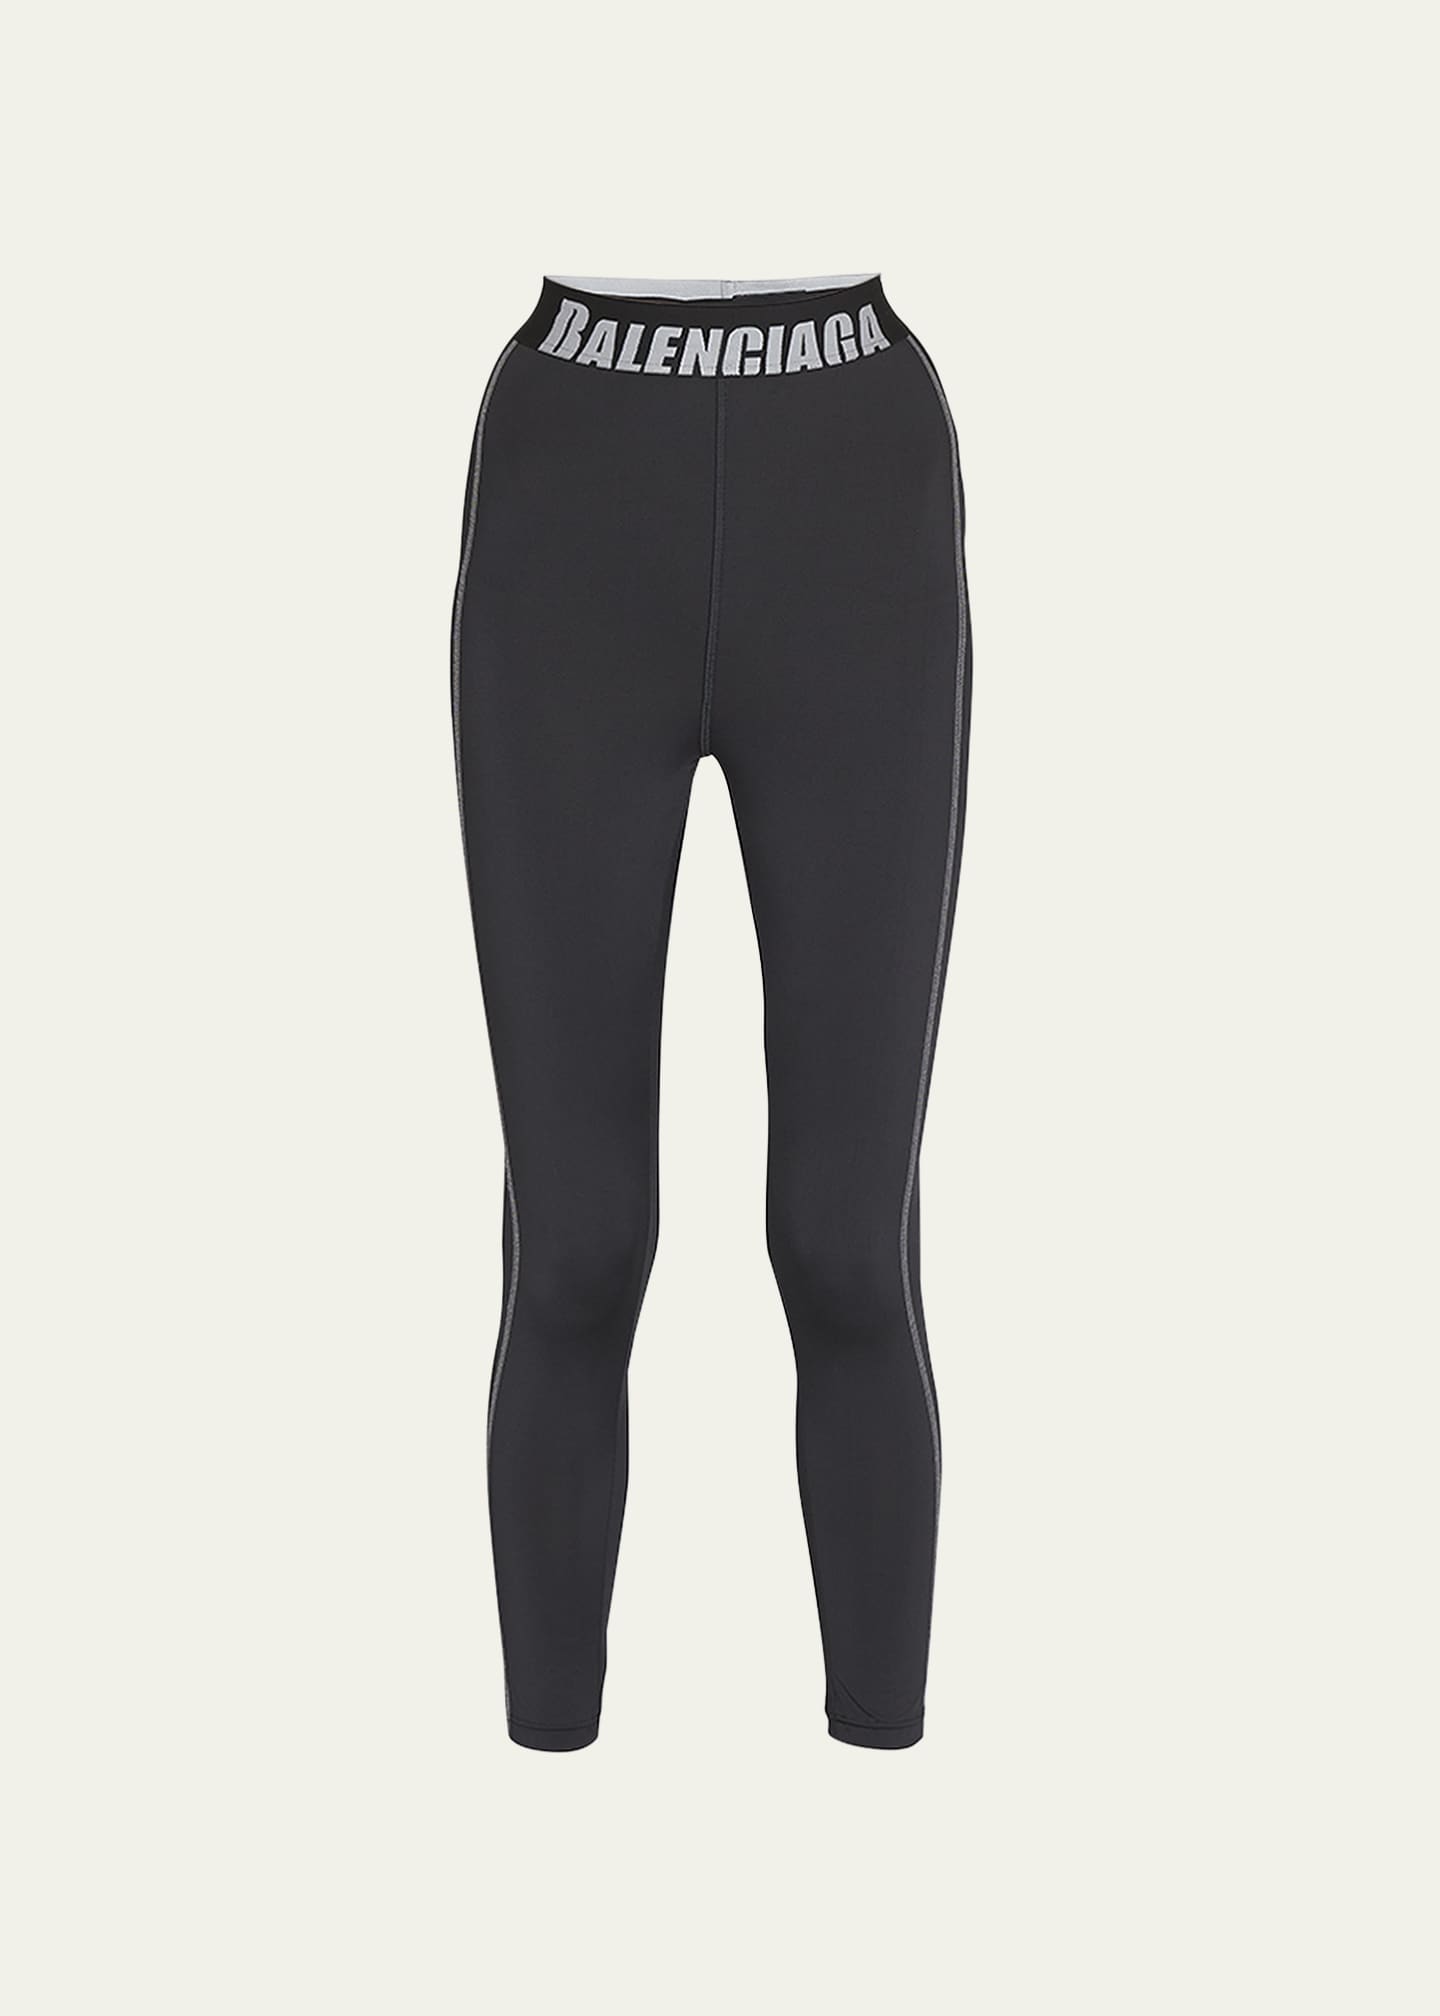 Balenciaga Athletic Cut Logo Leggings - Bergdorf Goodman